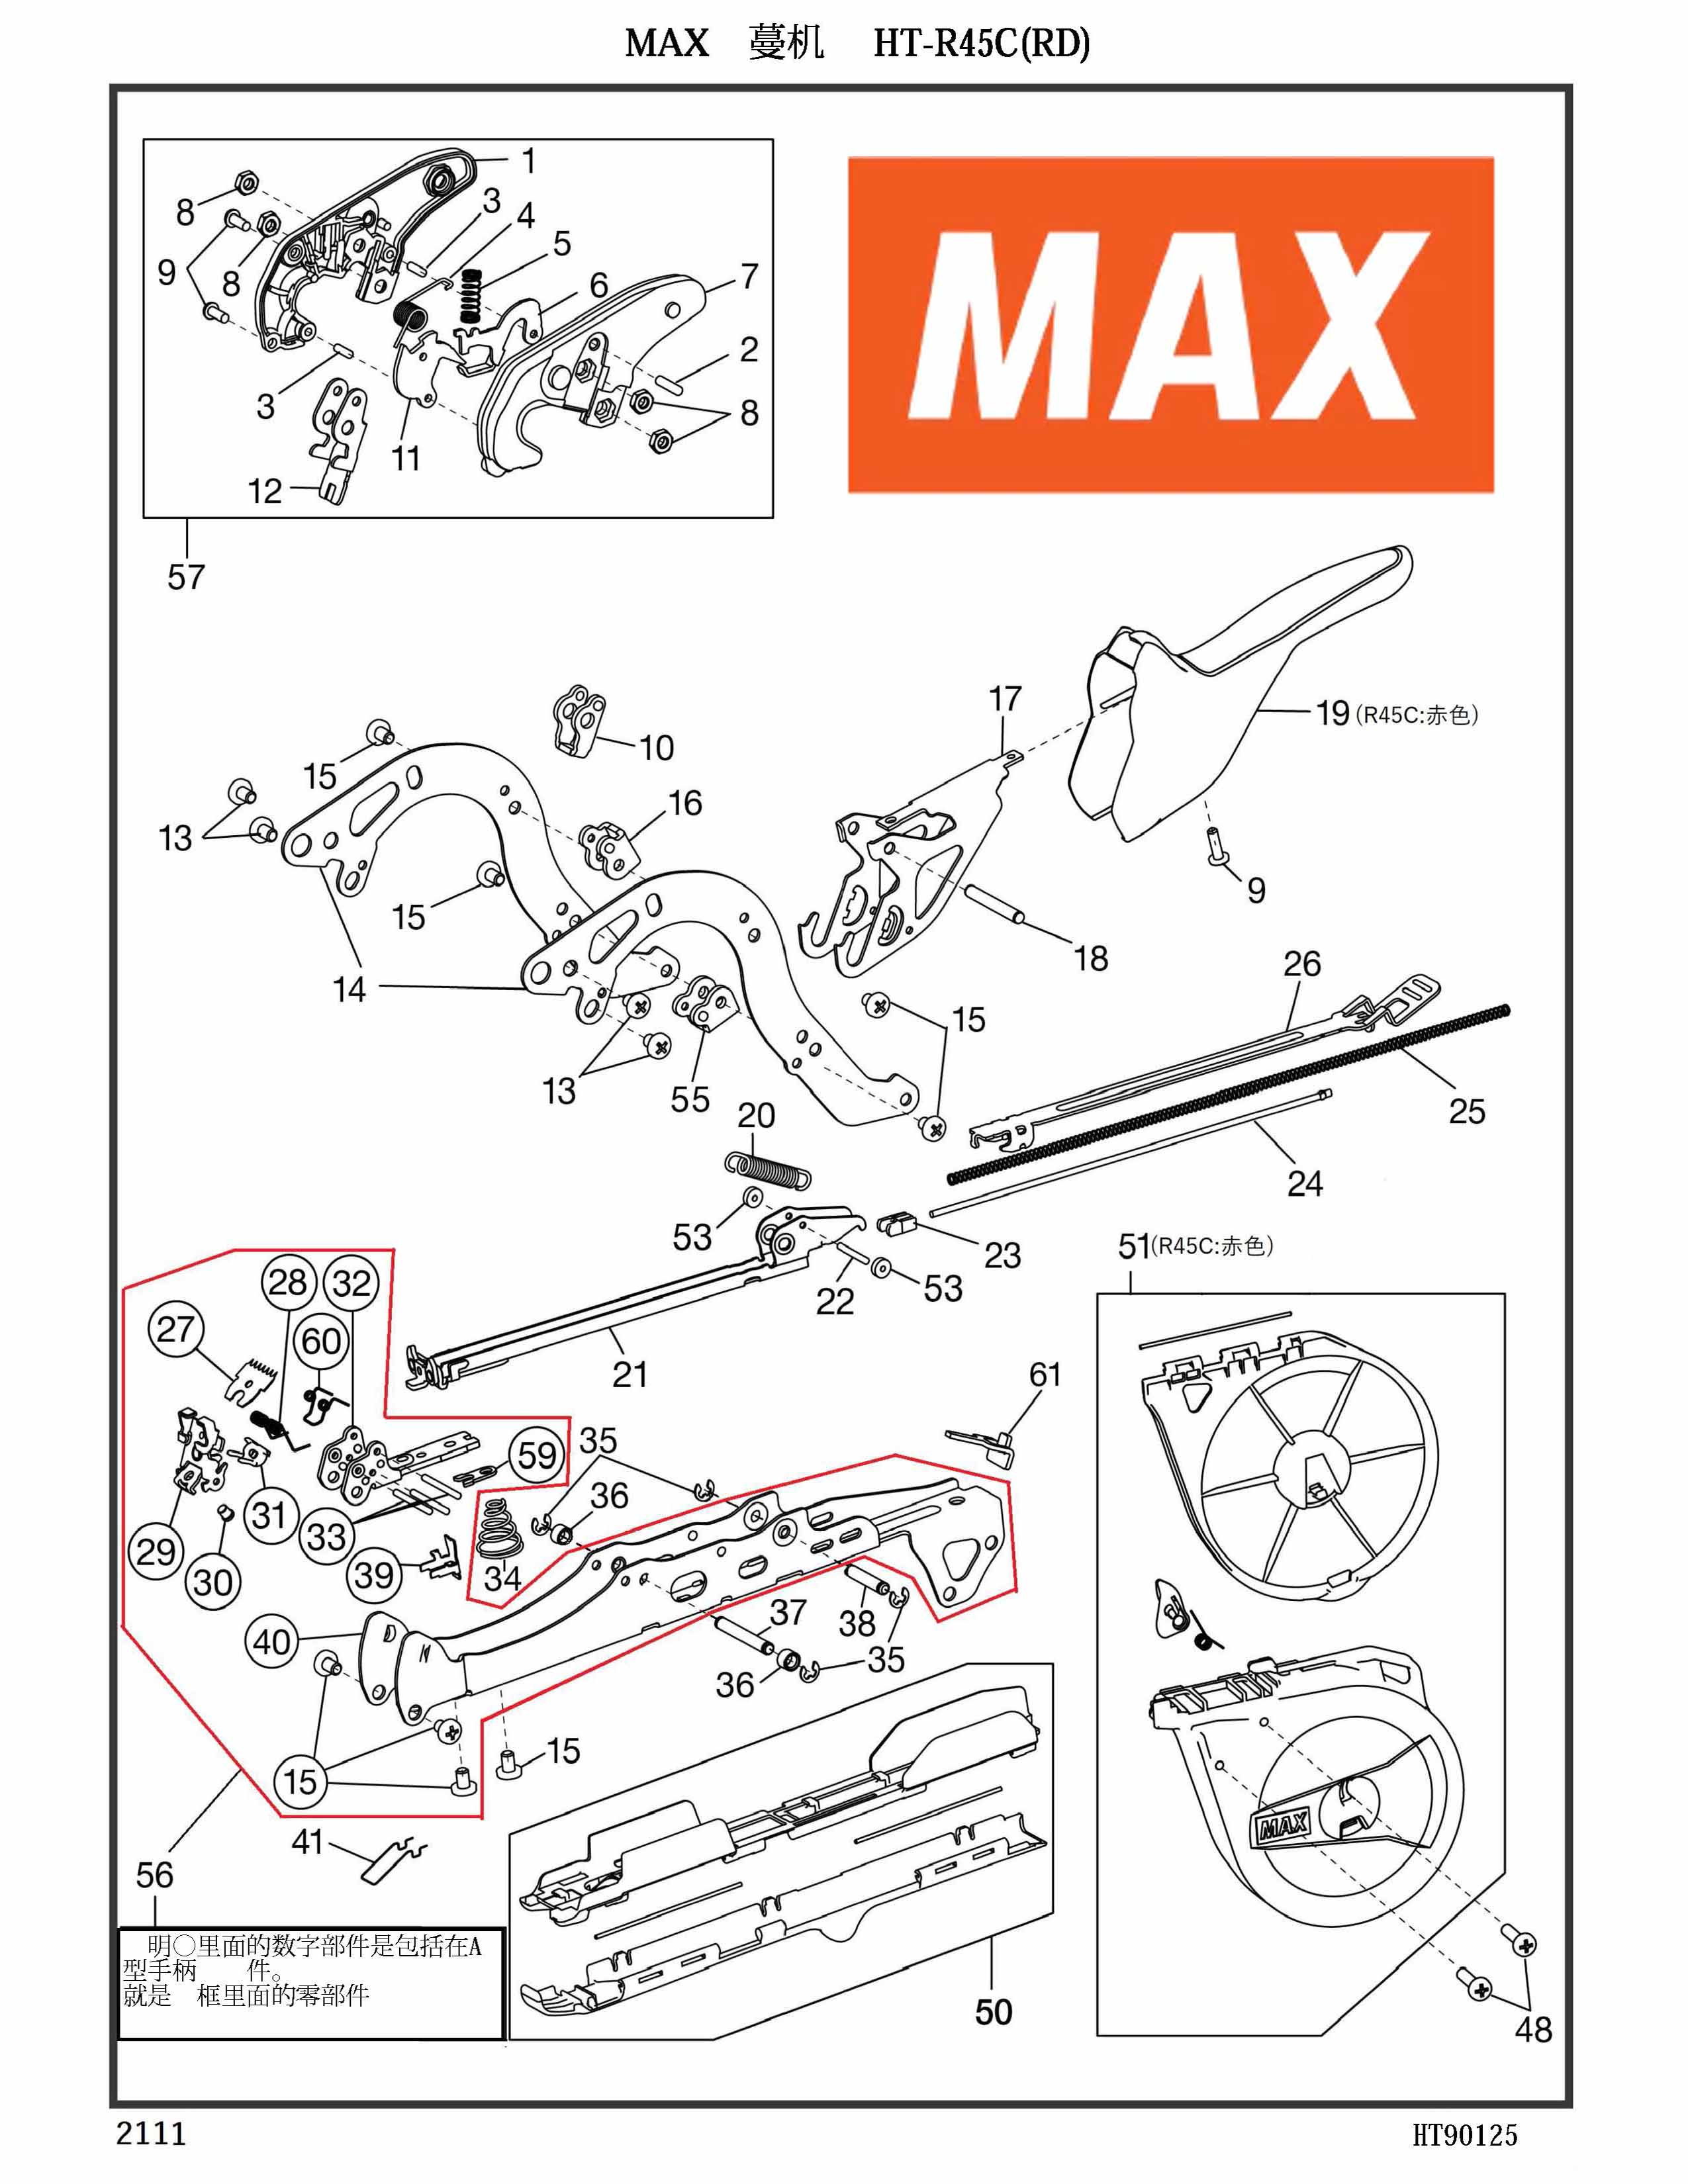 MAX Tapener Part KK29192 COMPRESSION SPRING 9192 (HT-R) Fits MAX HT-R45L(O) R45C(RD) #5